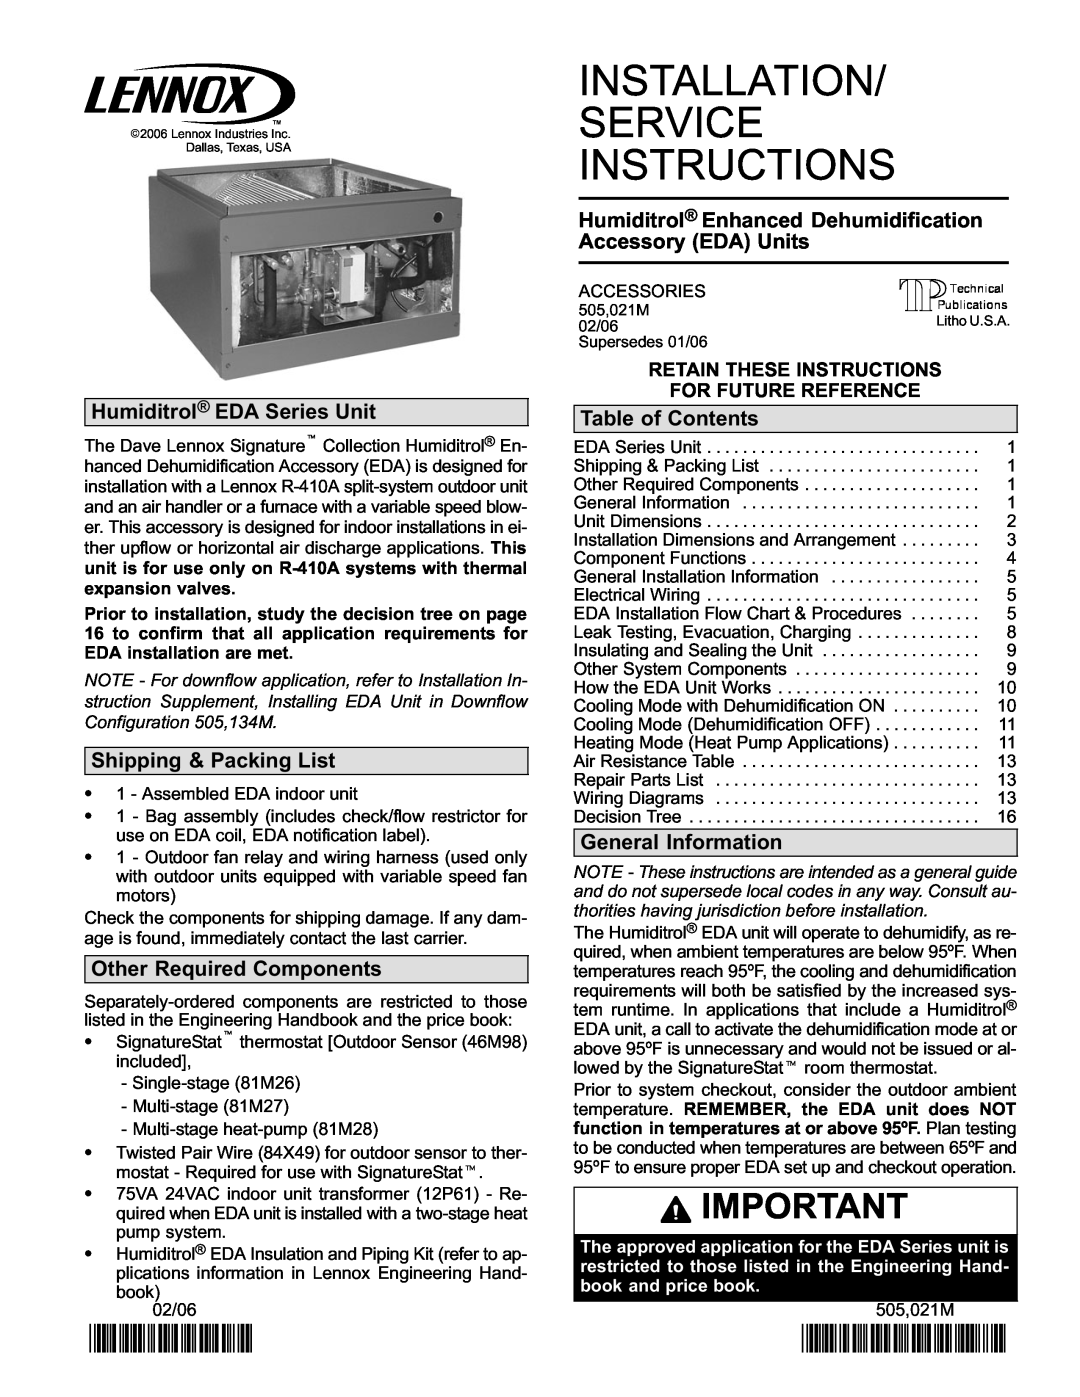 Lennox International Inc 021, 505 installation instructions Installation Service Instructions, Humiditrol EDA Series Unit 